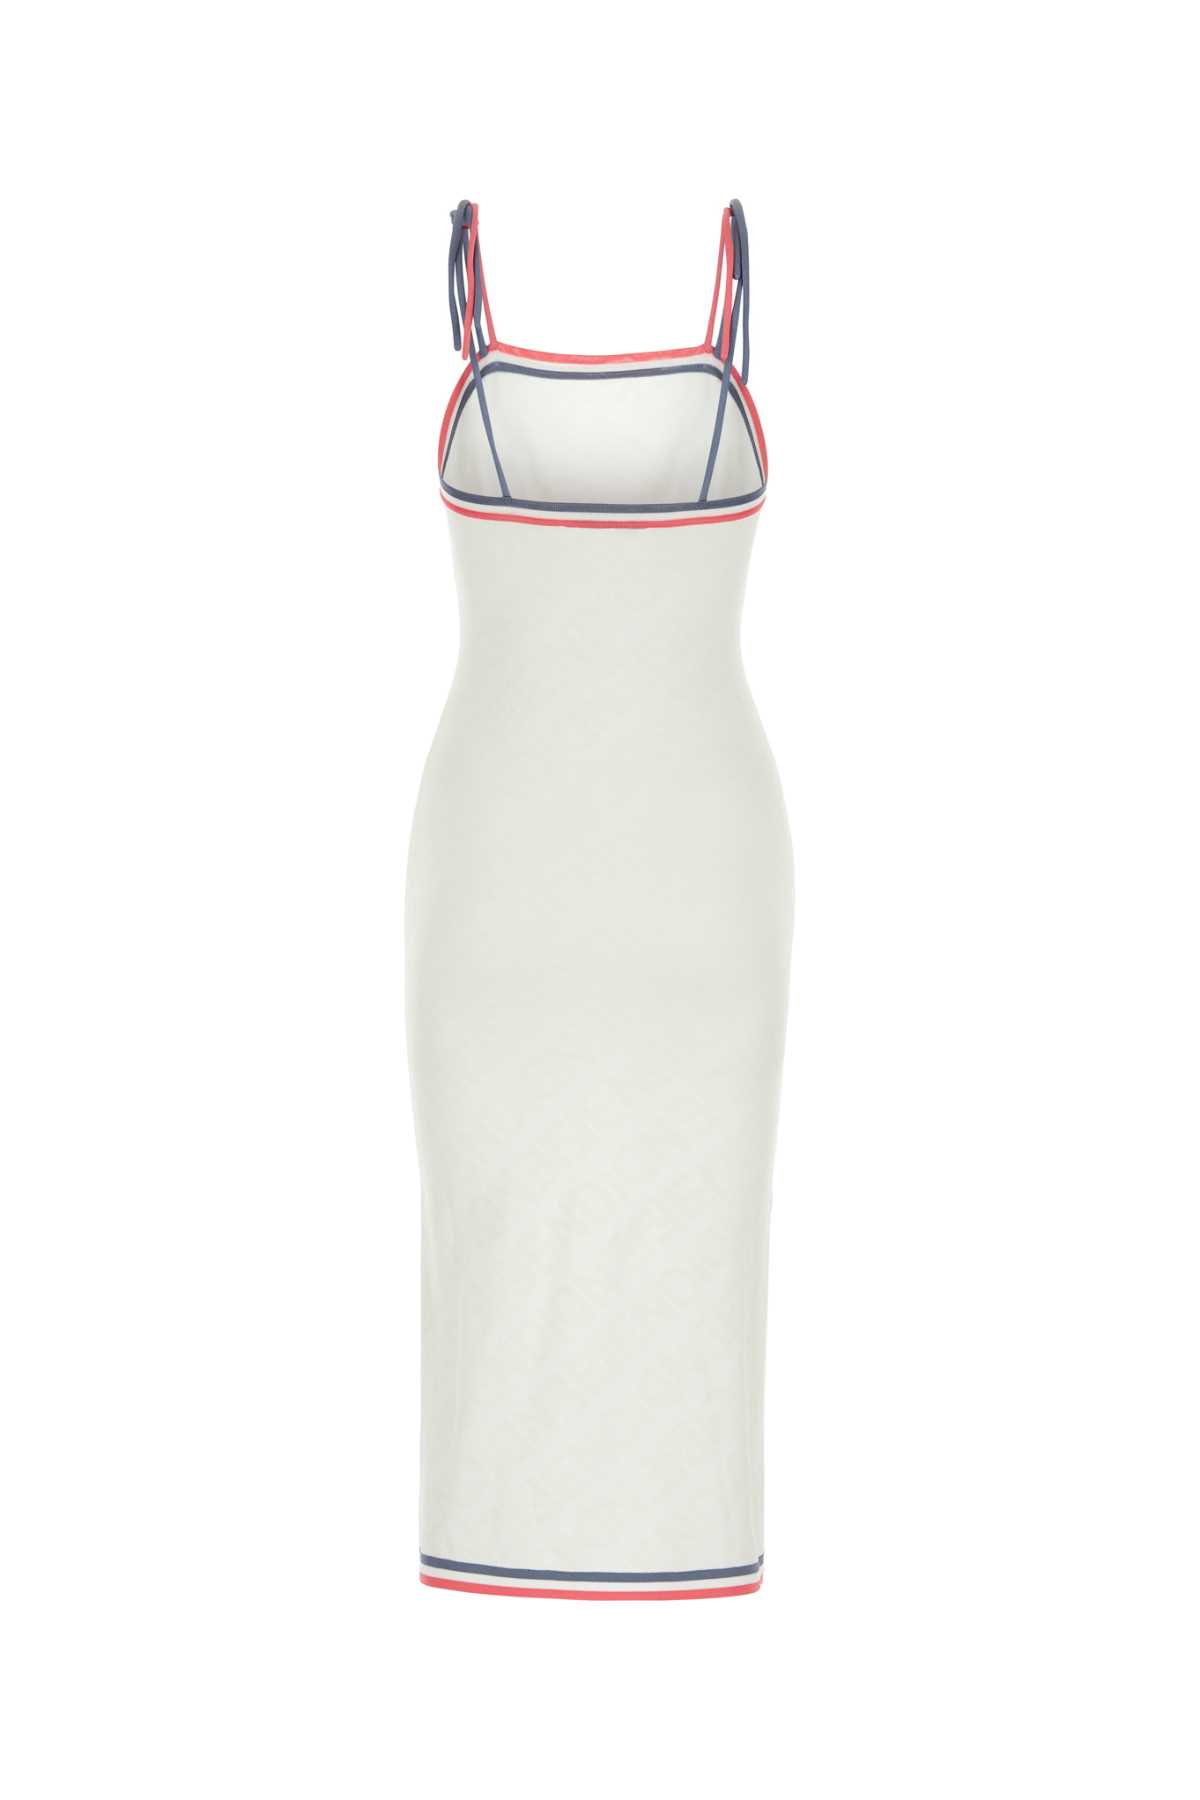 Fendi Ivory Viscose Blend Dress In White